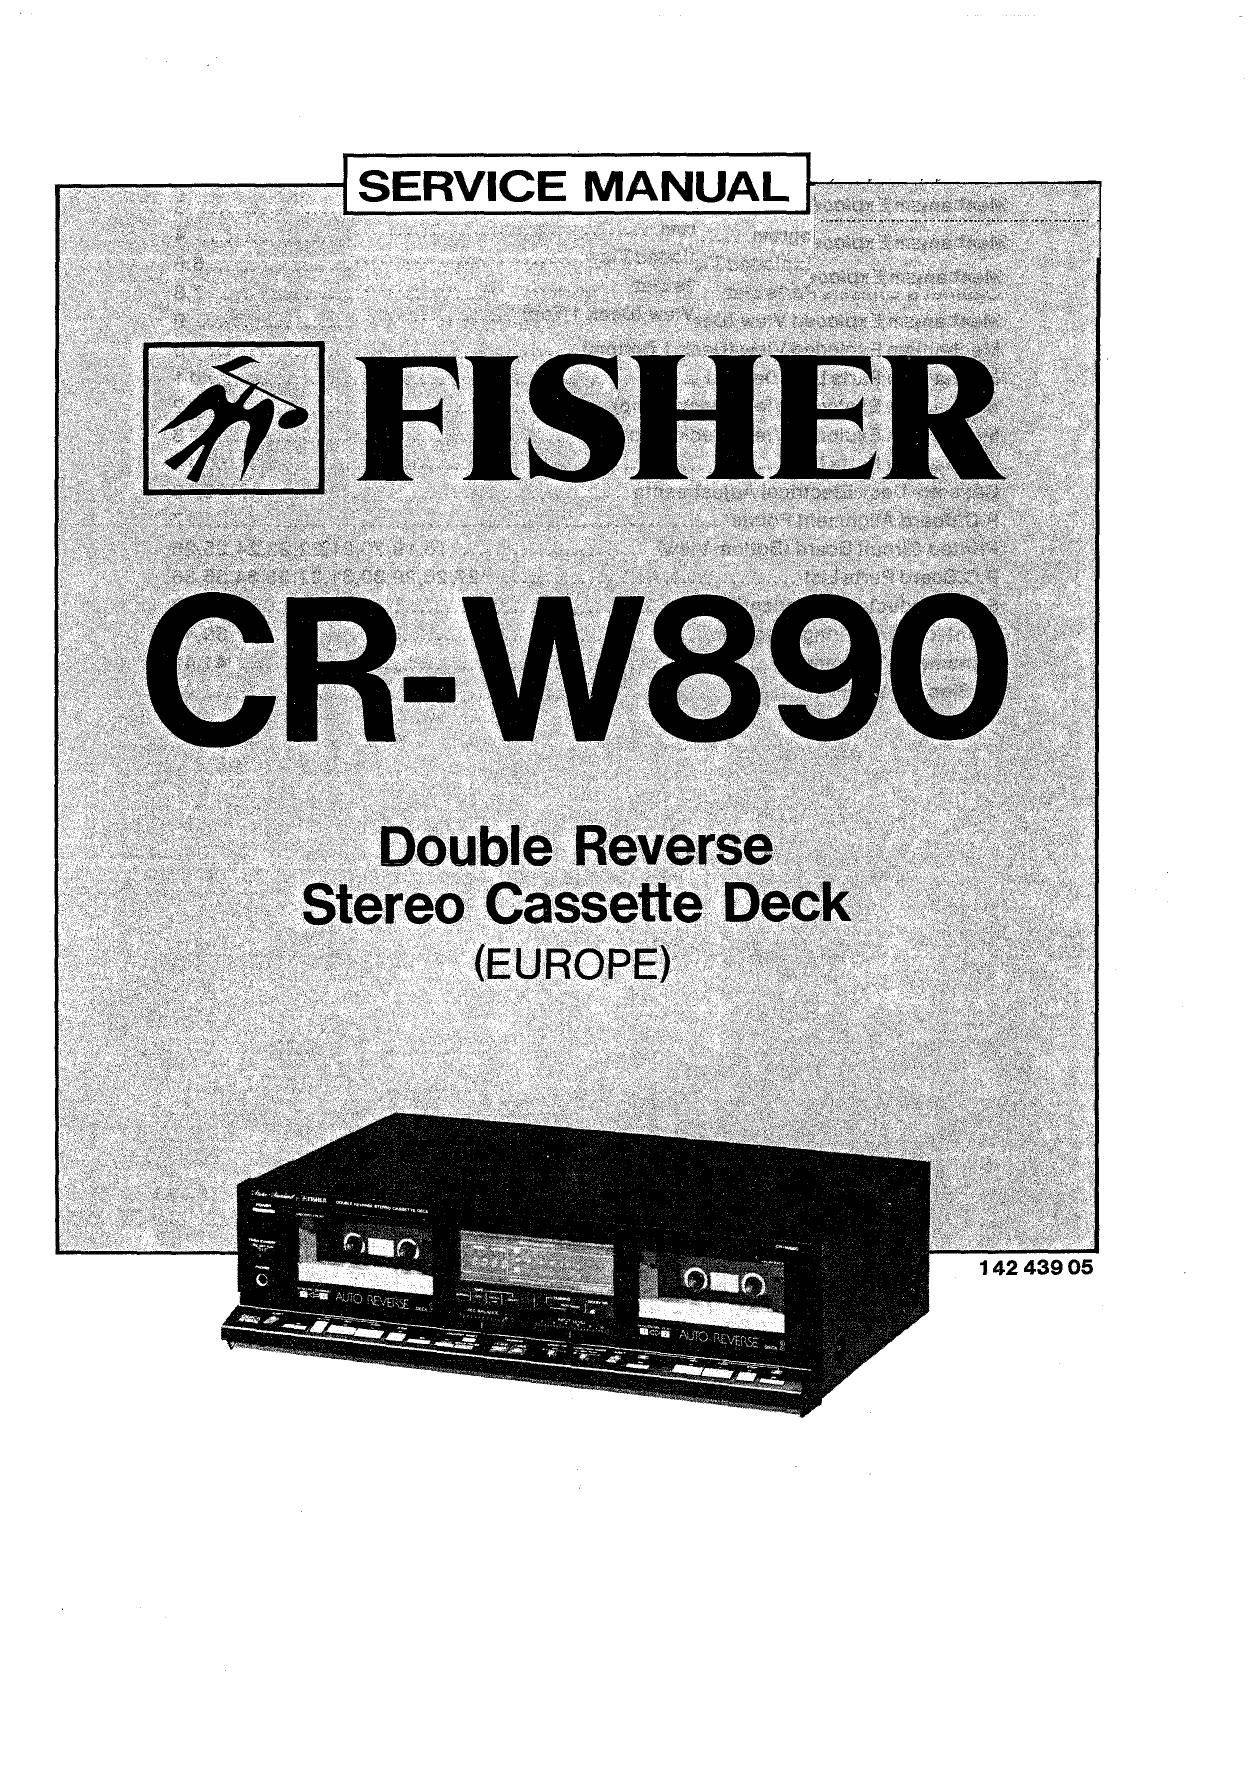 Fisher CR-W890